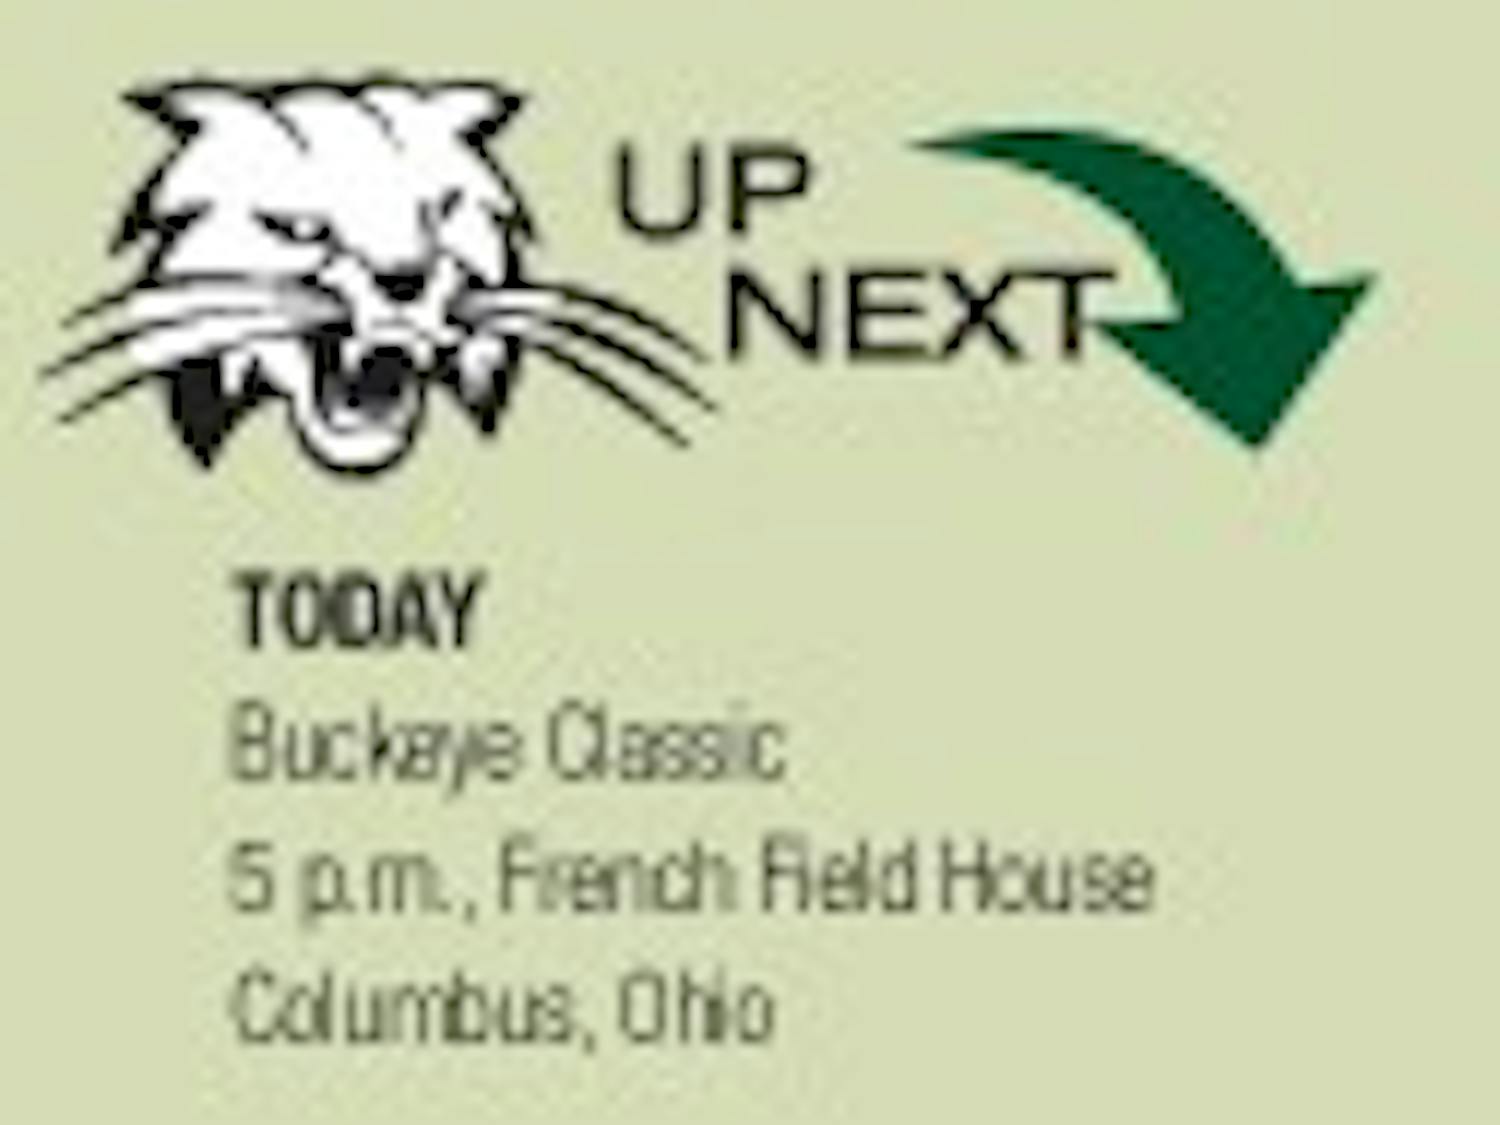 Track & Field: Buckeye Classic marks 1st season hurdle for Bobcats  